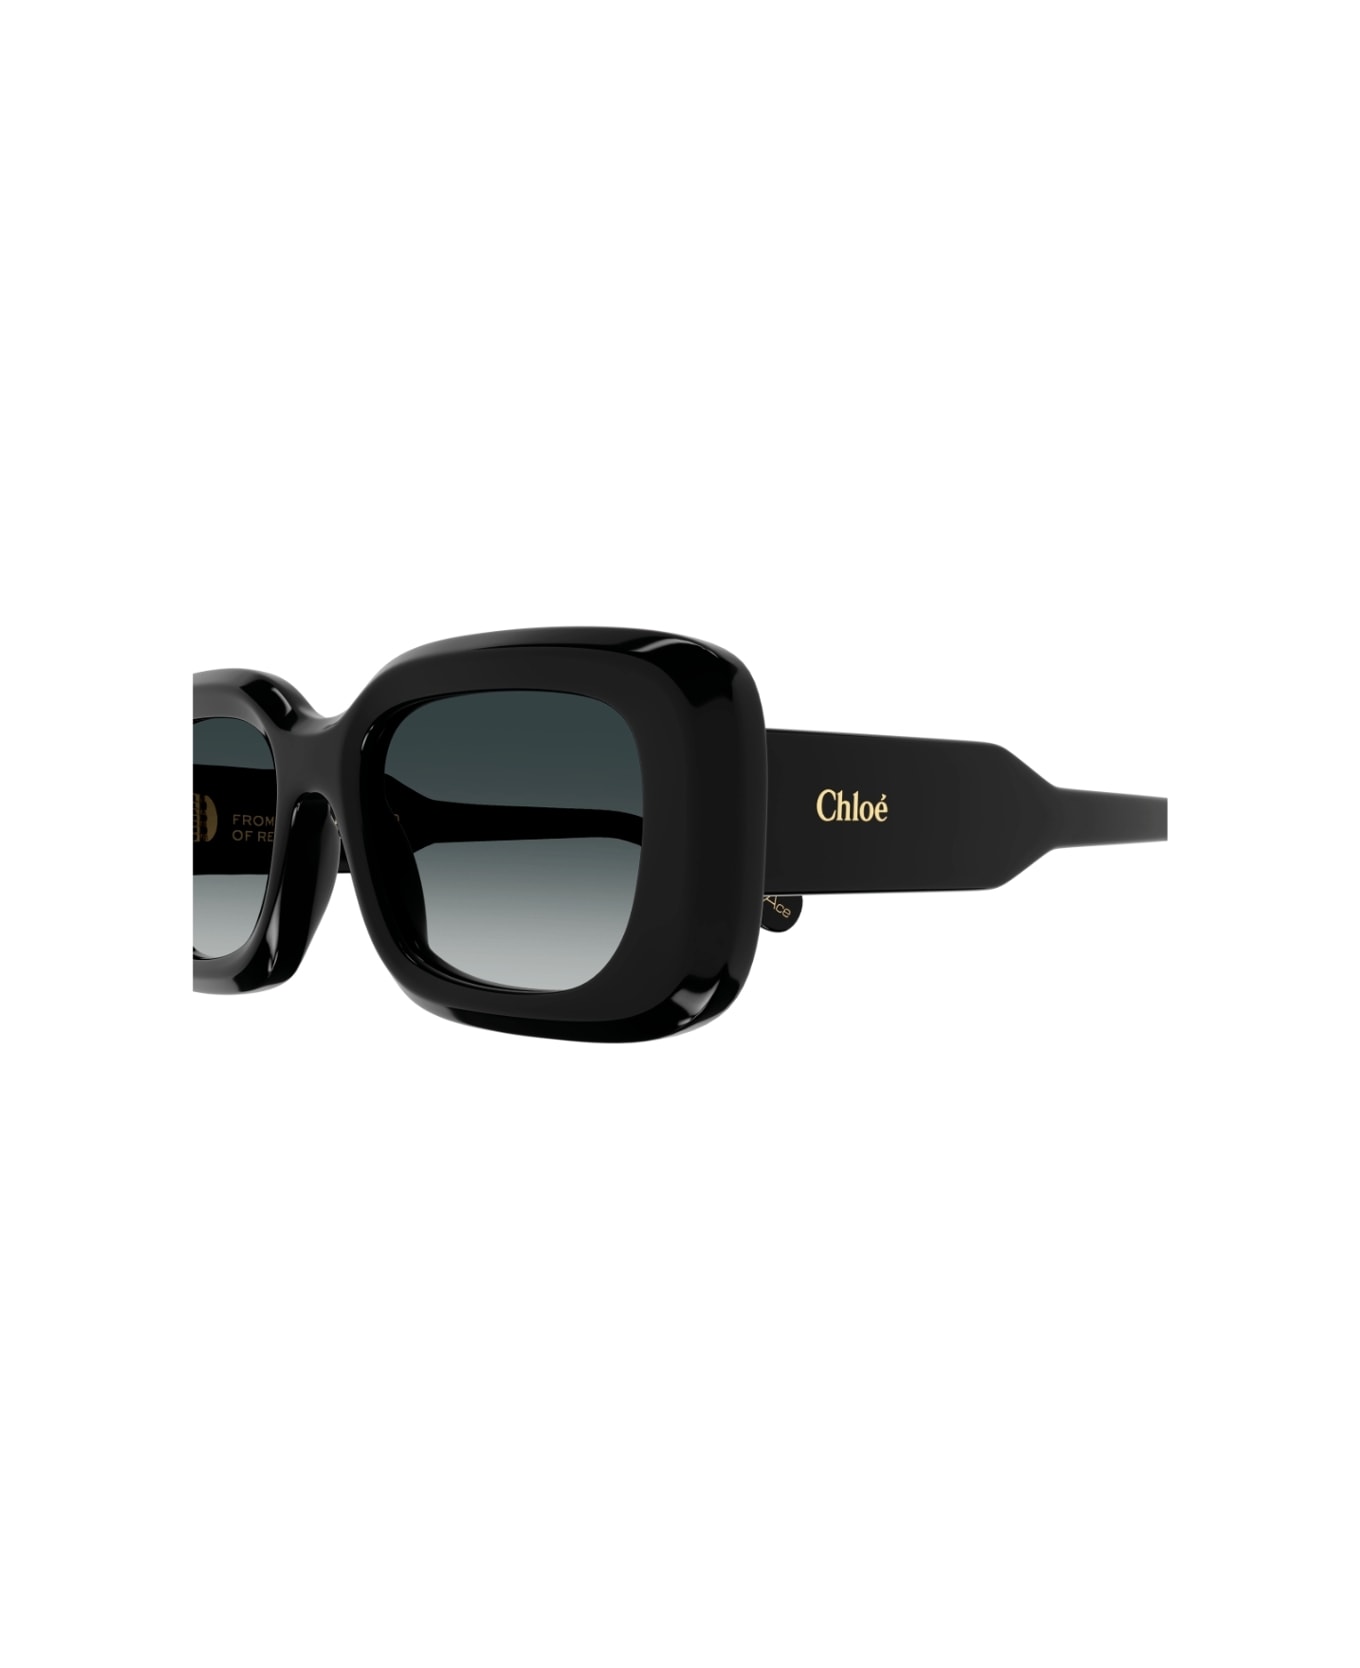 Chloé Eyewear CH0188s 001 Sunglasses